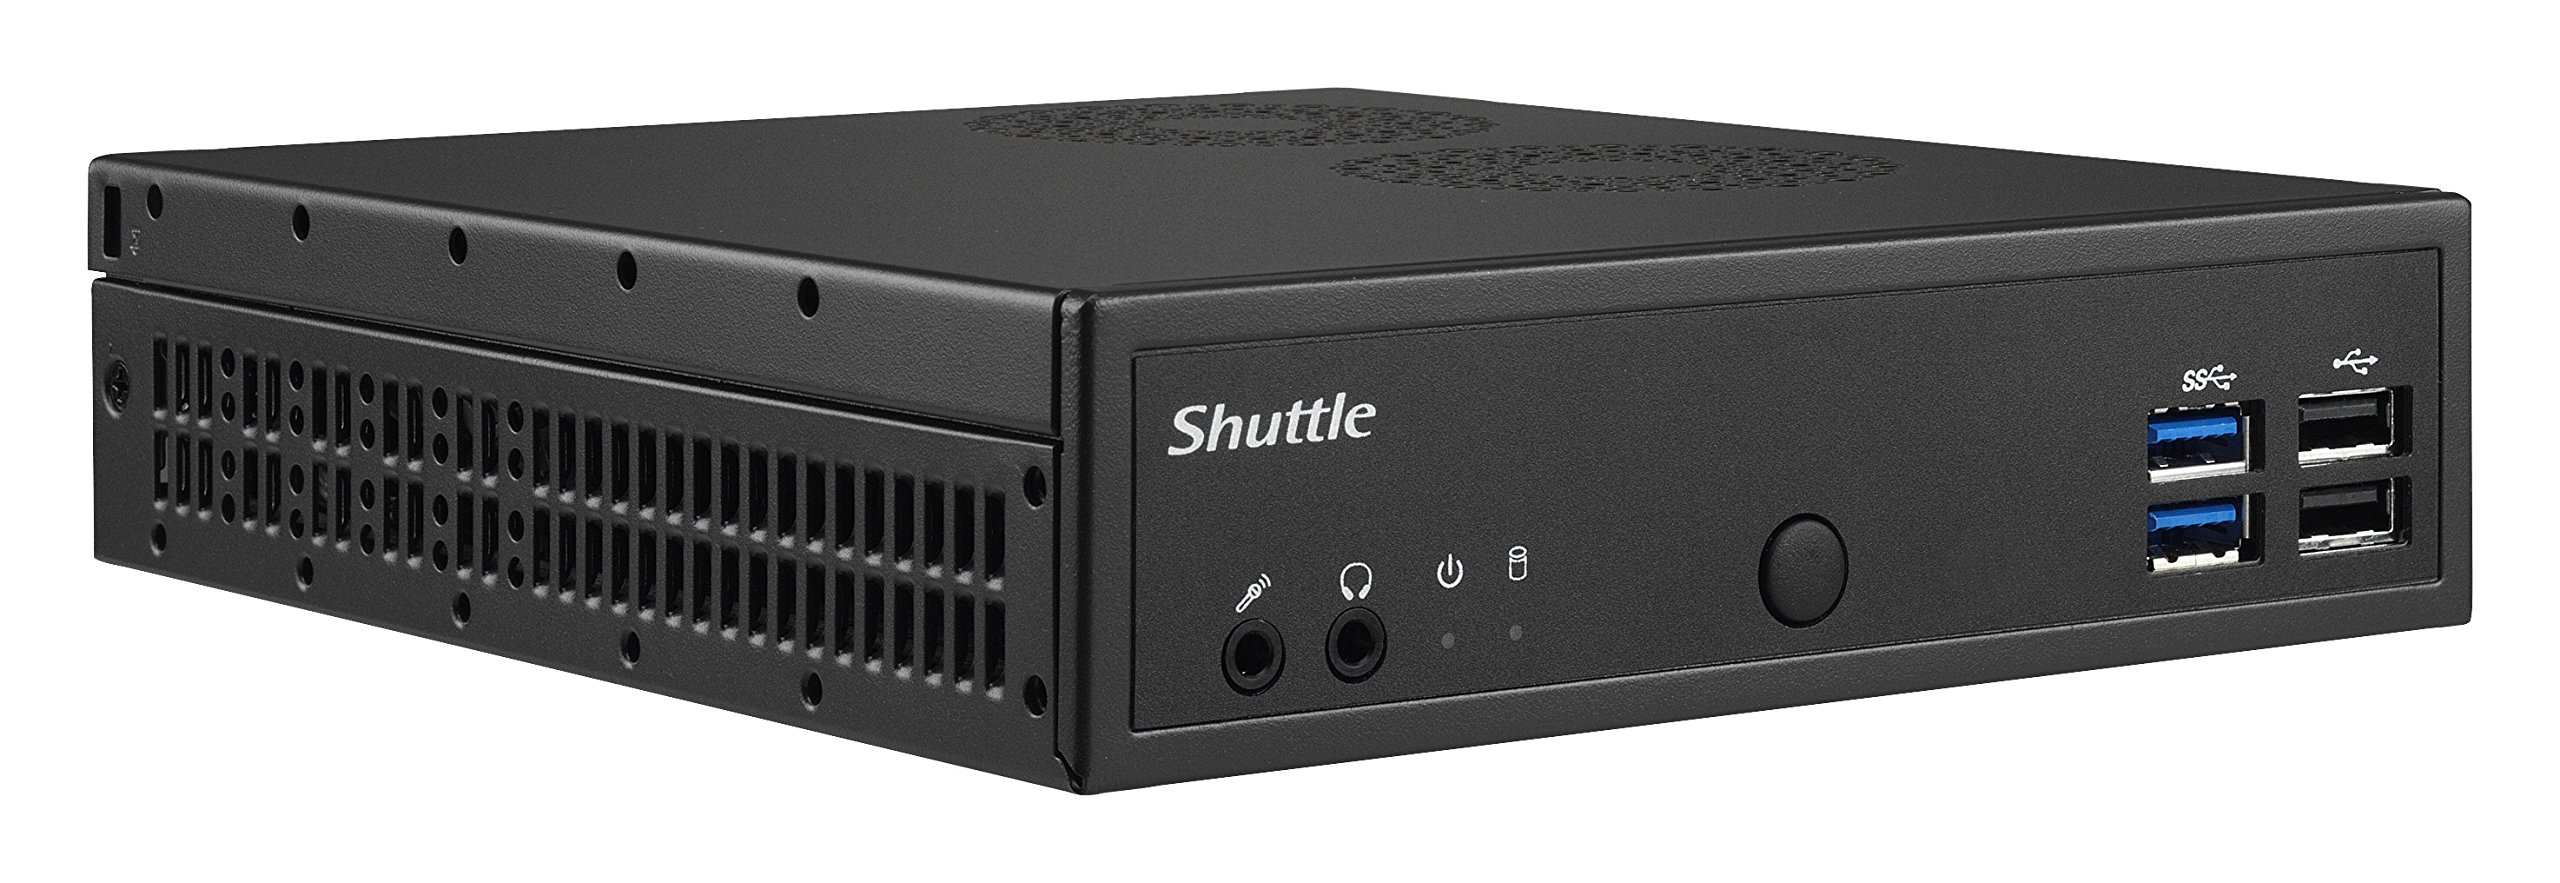 Shuttle XPC Slim DH02U Intel Kabylake Celeron 3865U, MXM GTX 1050 4 HDMI, Support 4K/UHD, Single Gig LAN, Dual Slot Max 32GB RAM - Click Image to Close